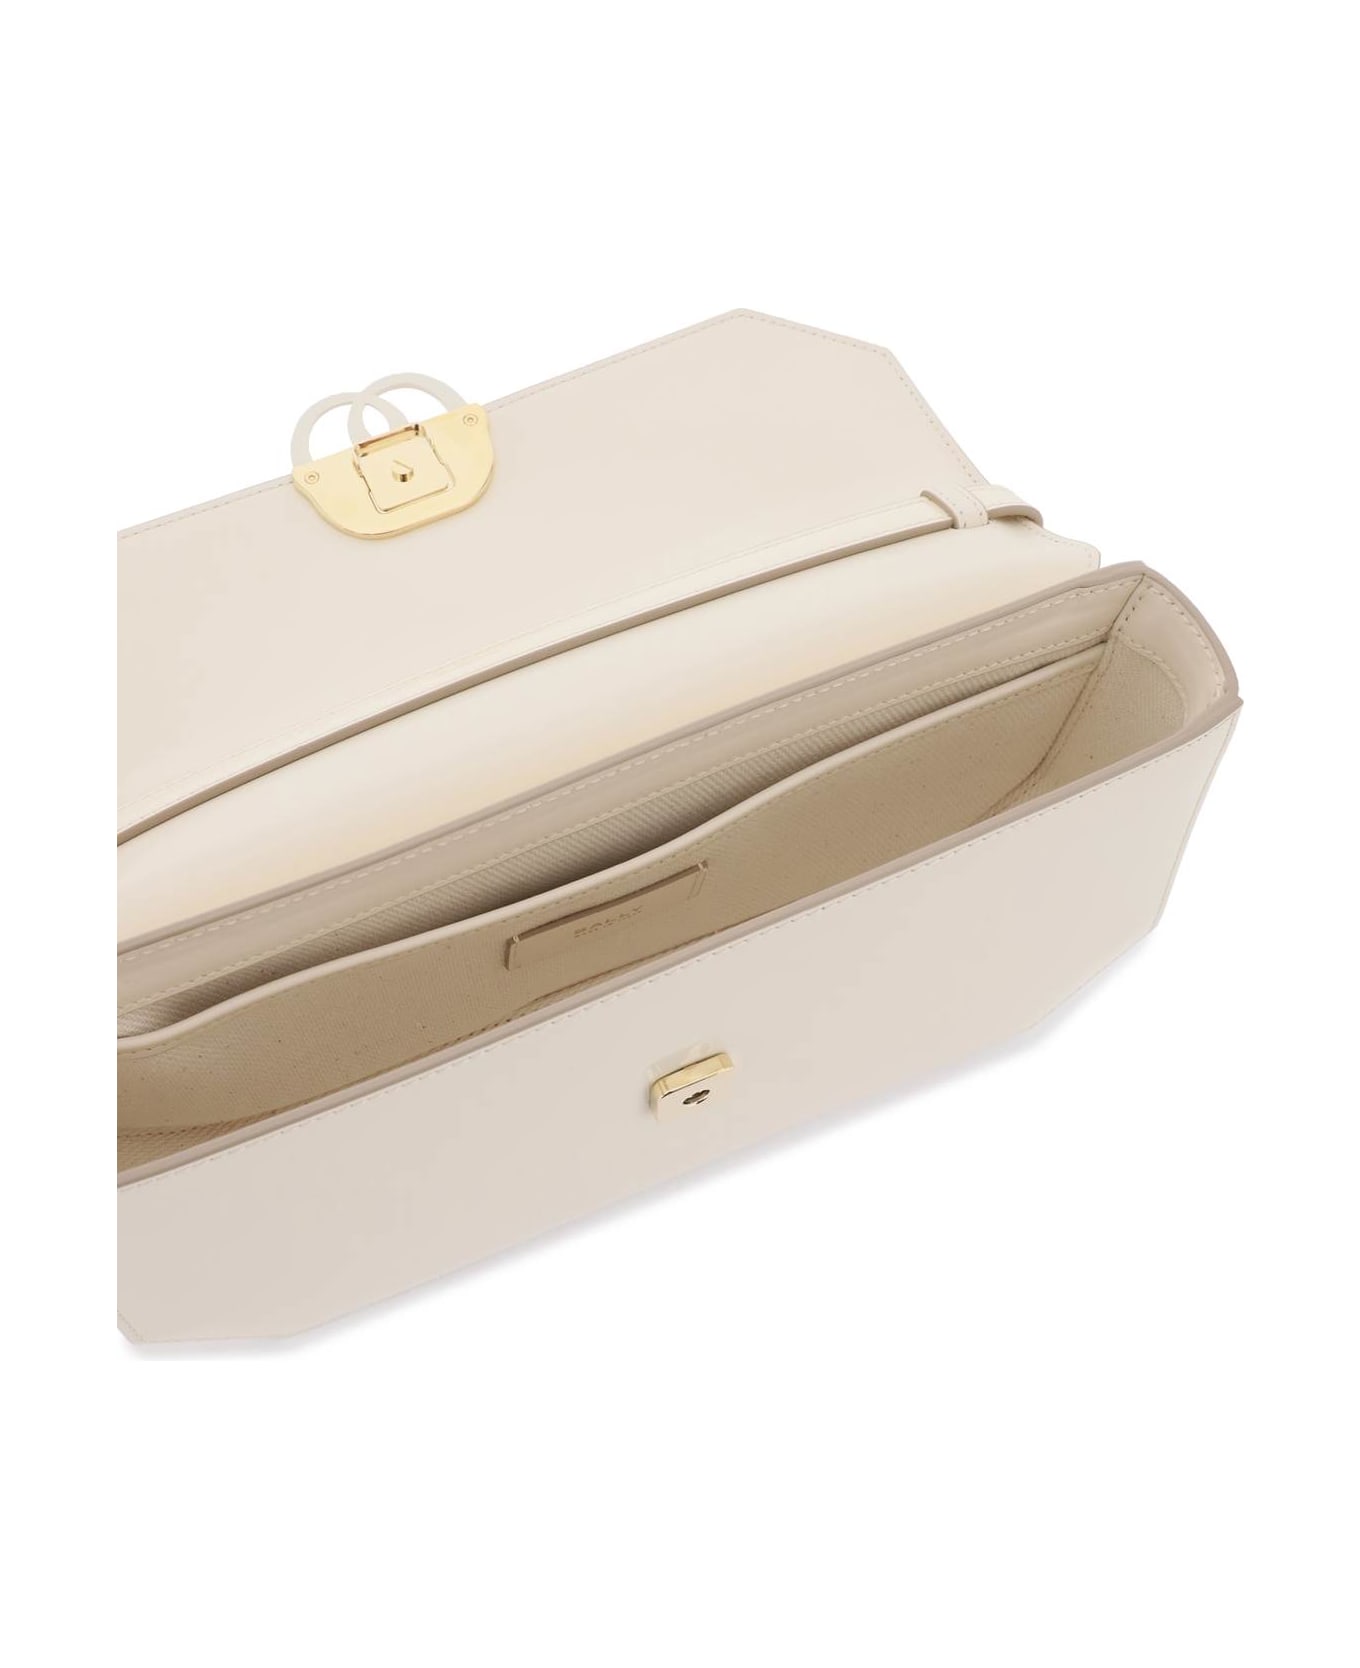 Bally Emblem Shoulder Bag - BONE 21 YELLOW GOLD (White)